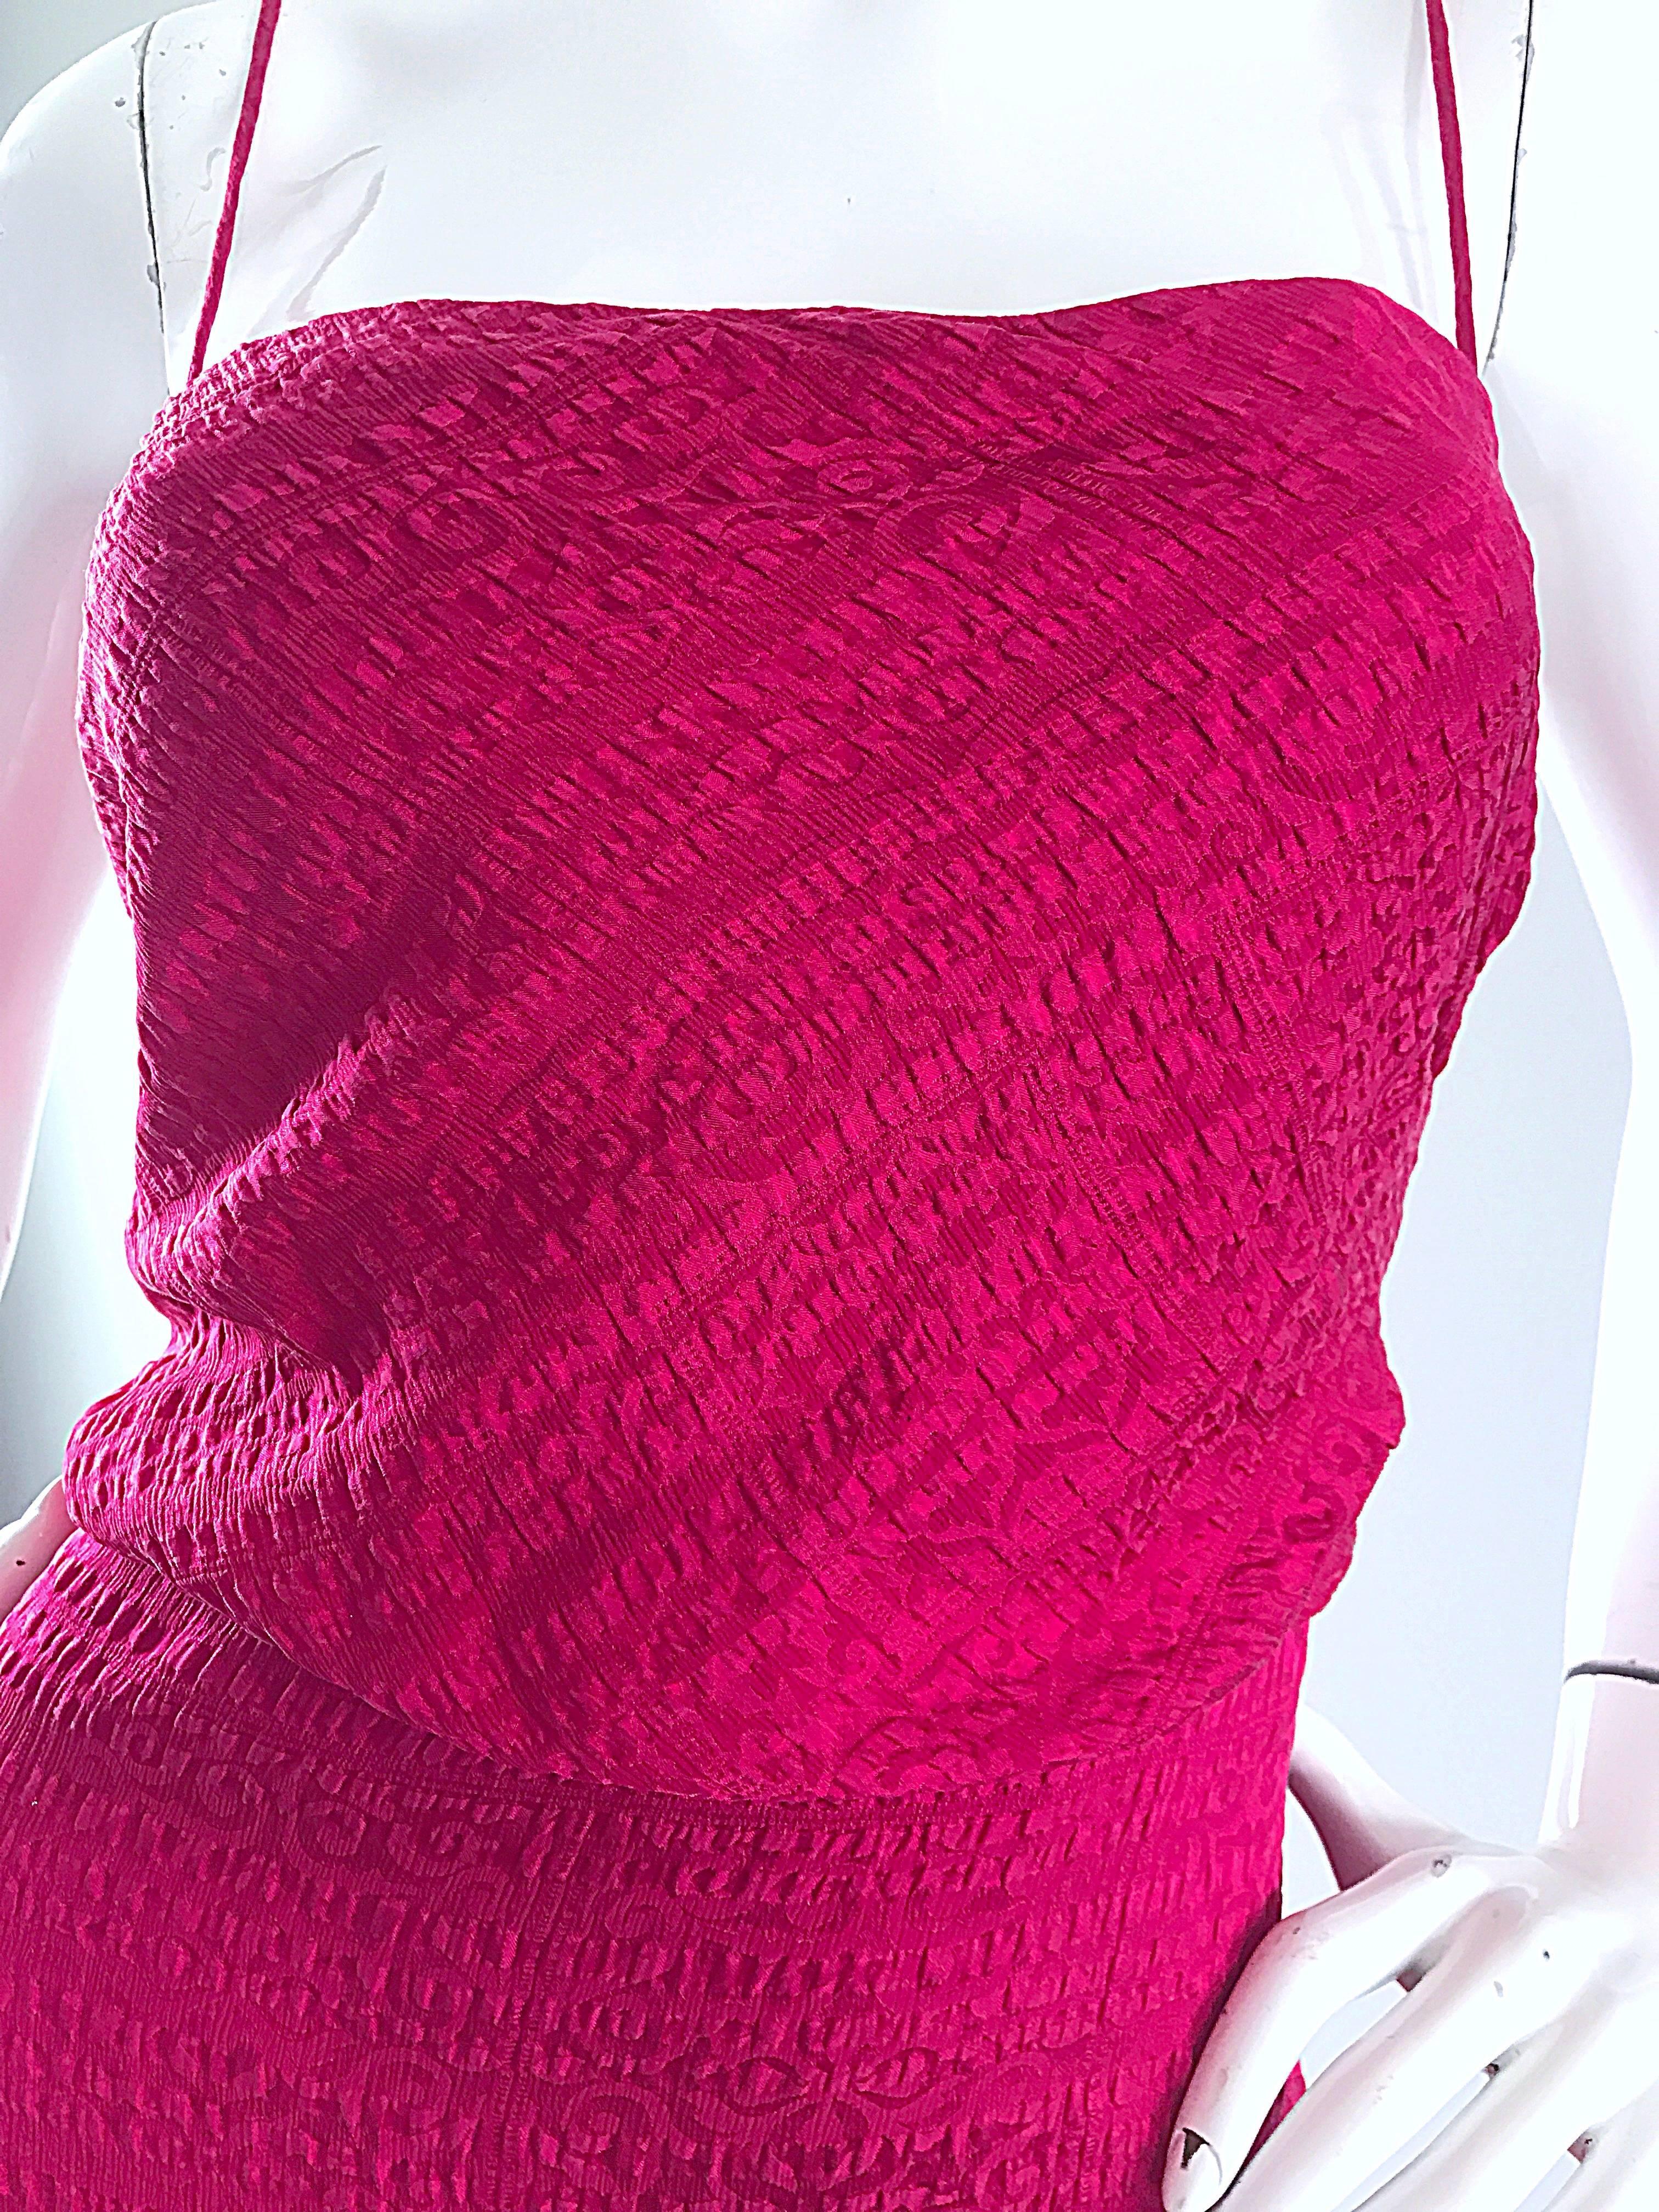 armani pink dress